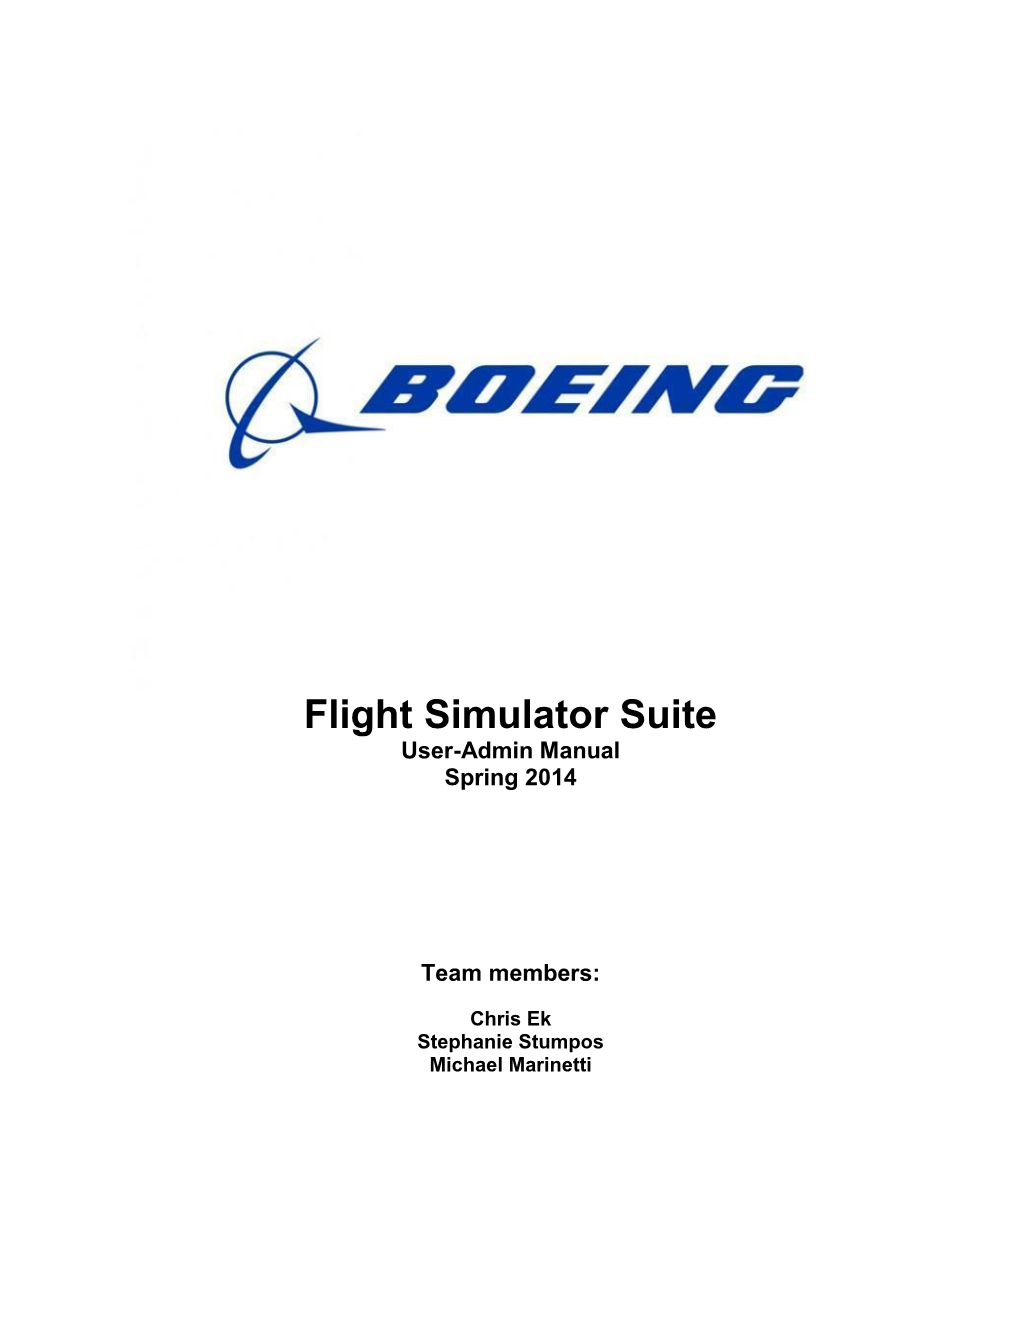 Flight Simulator Suite User-Admin Manual Spring 2014